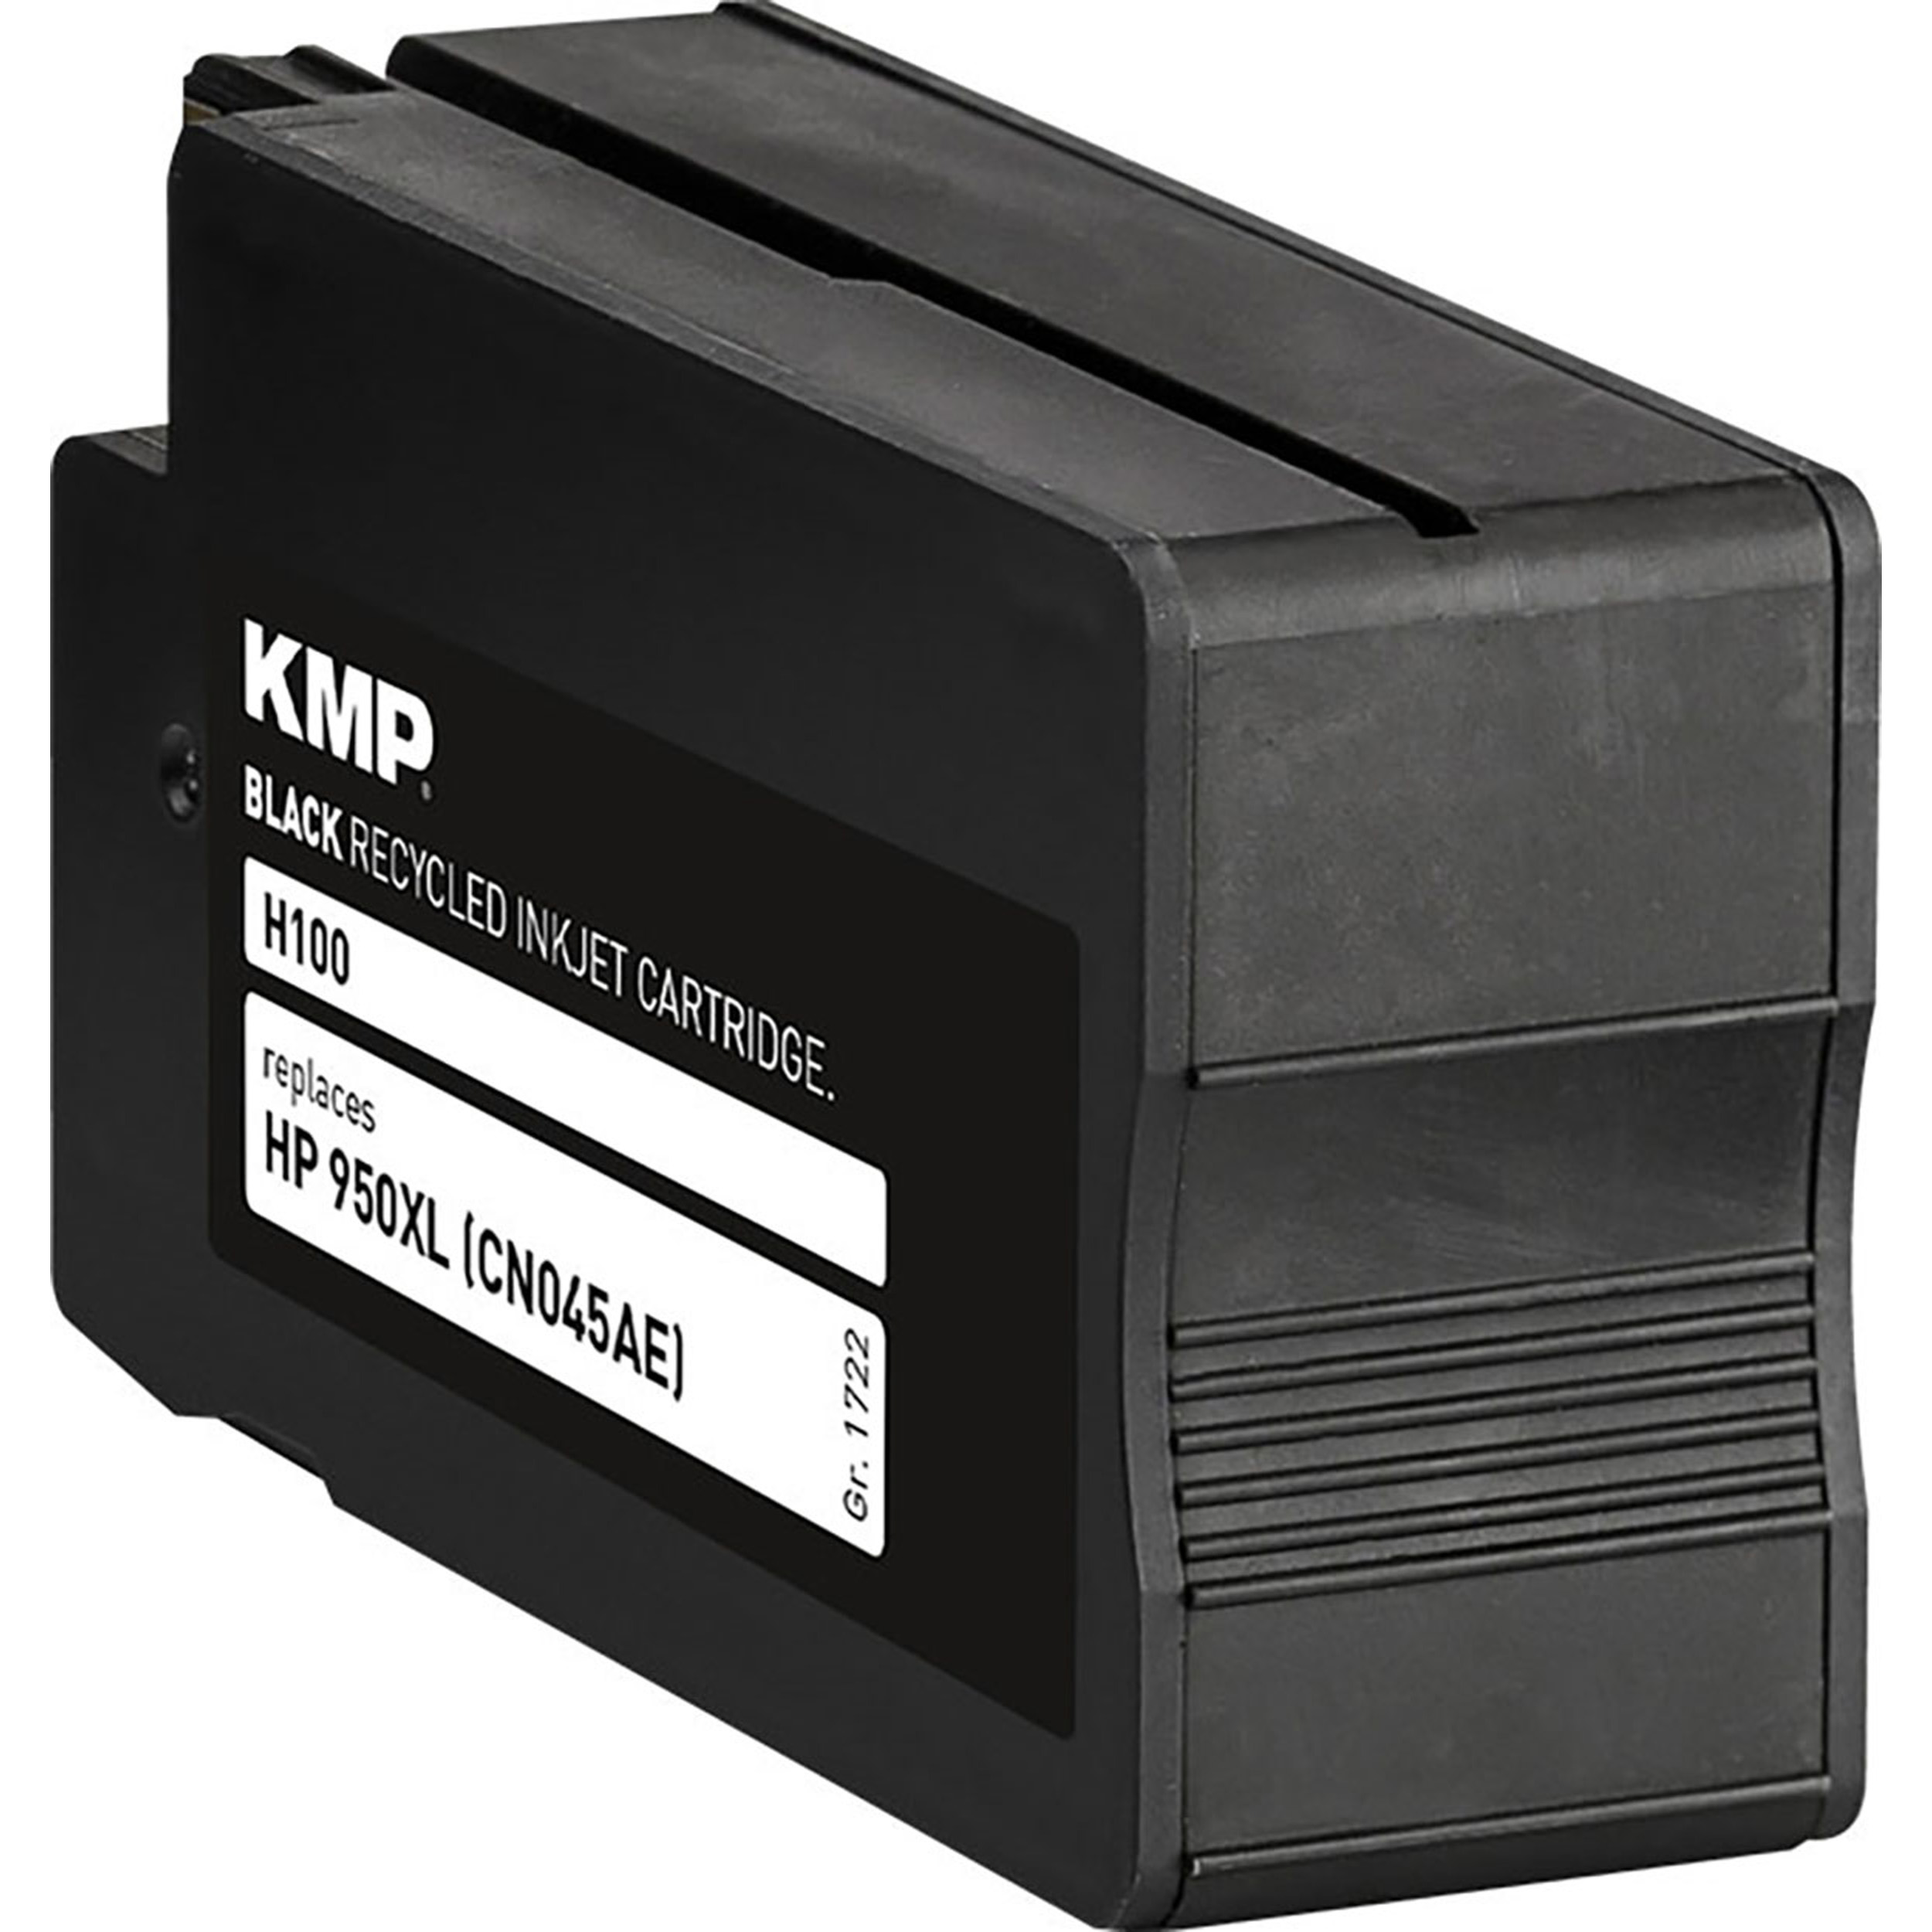 Tintenpatrone 950XL für Cartridge KMP Black black HP (CN045AE) (CN045AE) Ink